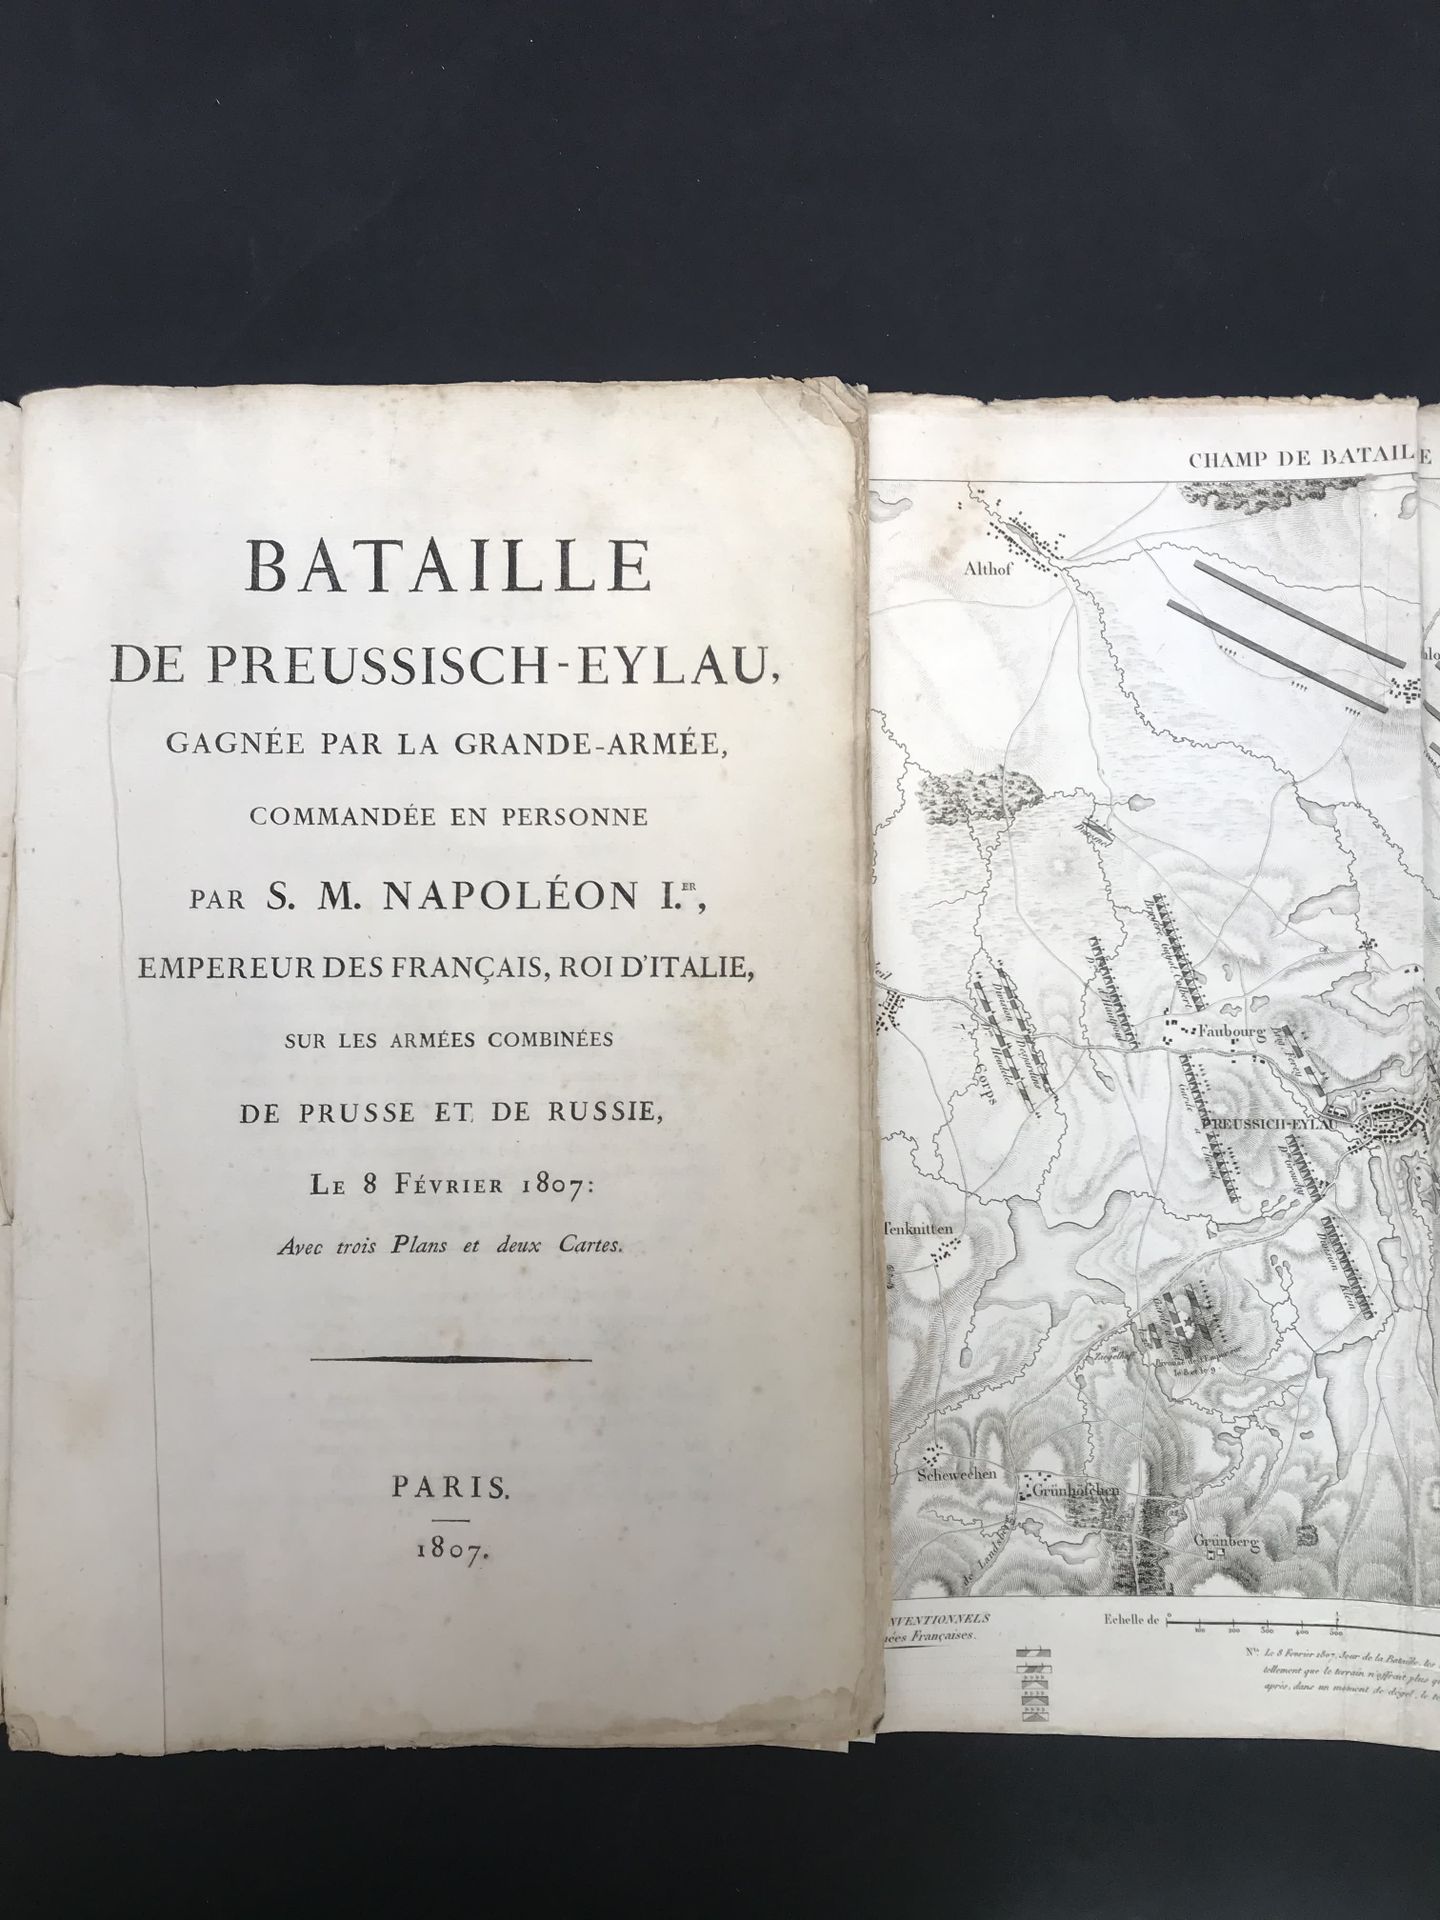 Null Preussisch-eylau之战

1807年2月8日，由拿破仑一世（......）亲自指挥的大军赢得了胜利，有三张图纸和两张地图。

巴黎，18&hellip;